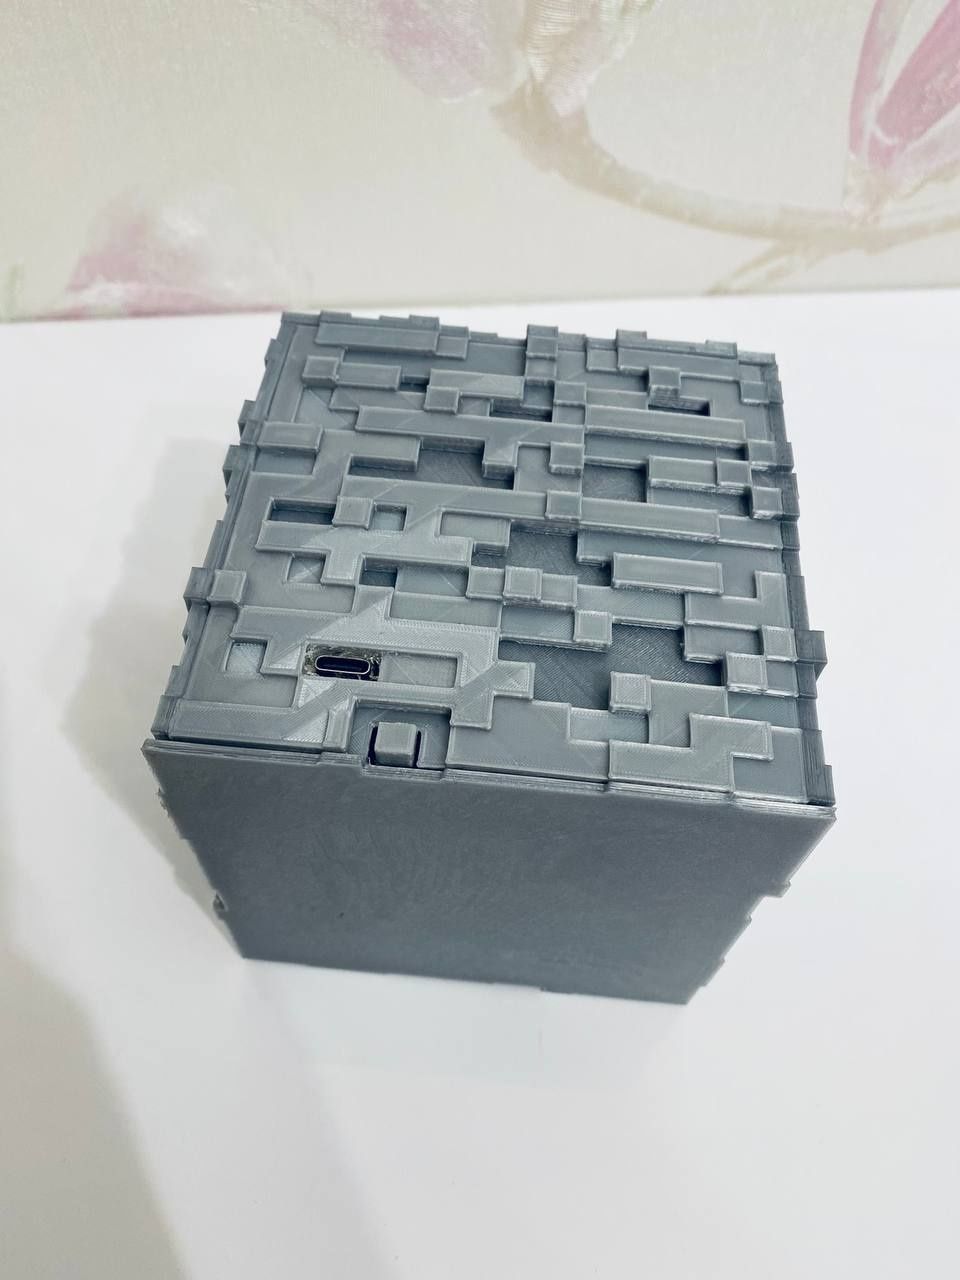 Алмазный блок из Mineсraft - ночник
Алмазный блок из майнкрафта, цвет